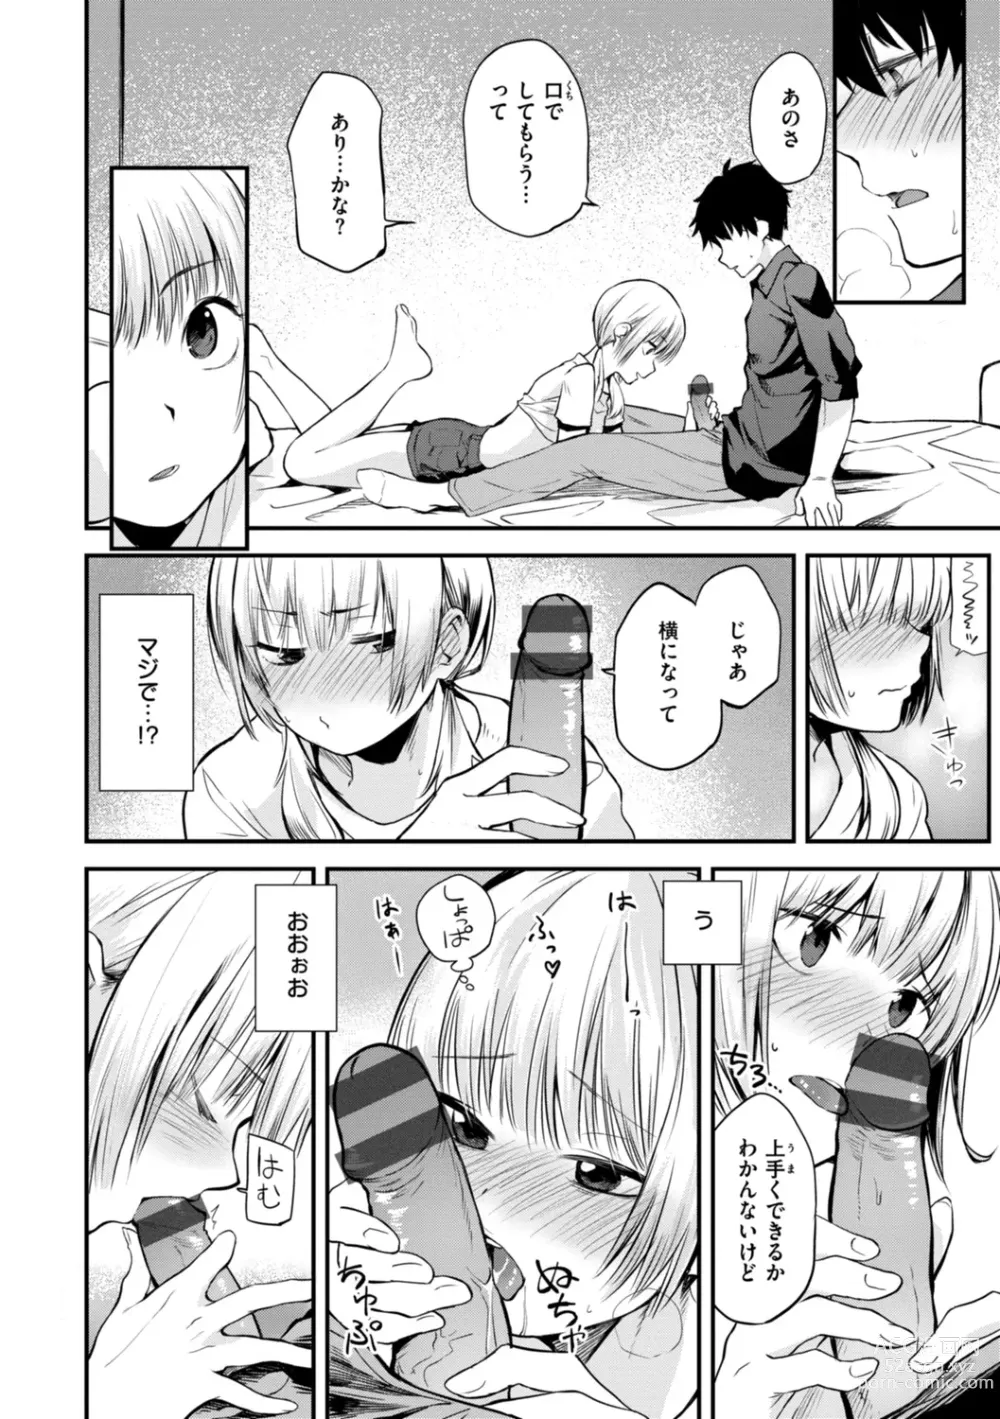 Page 14 of manga Jaa, Ecchi Shichau? - Shall we have H then?